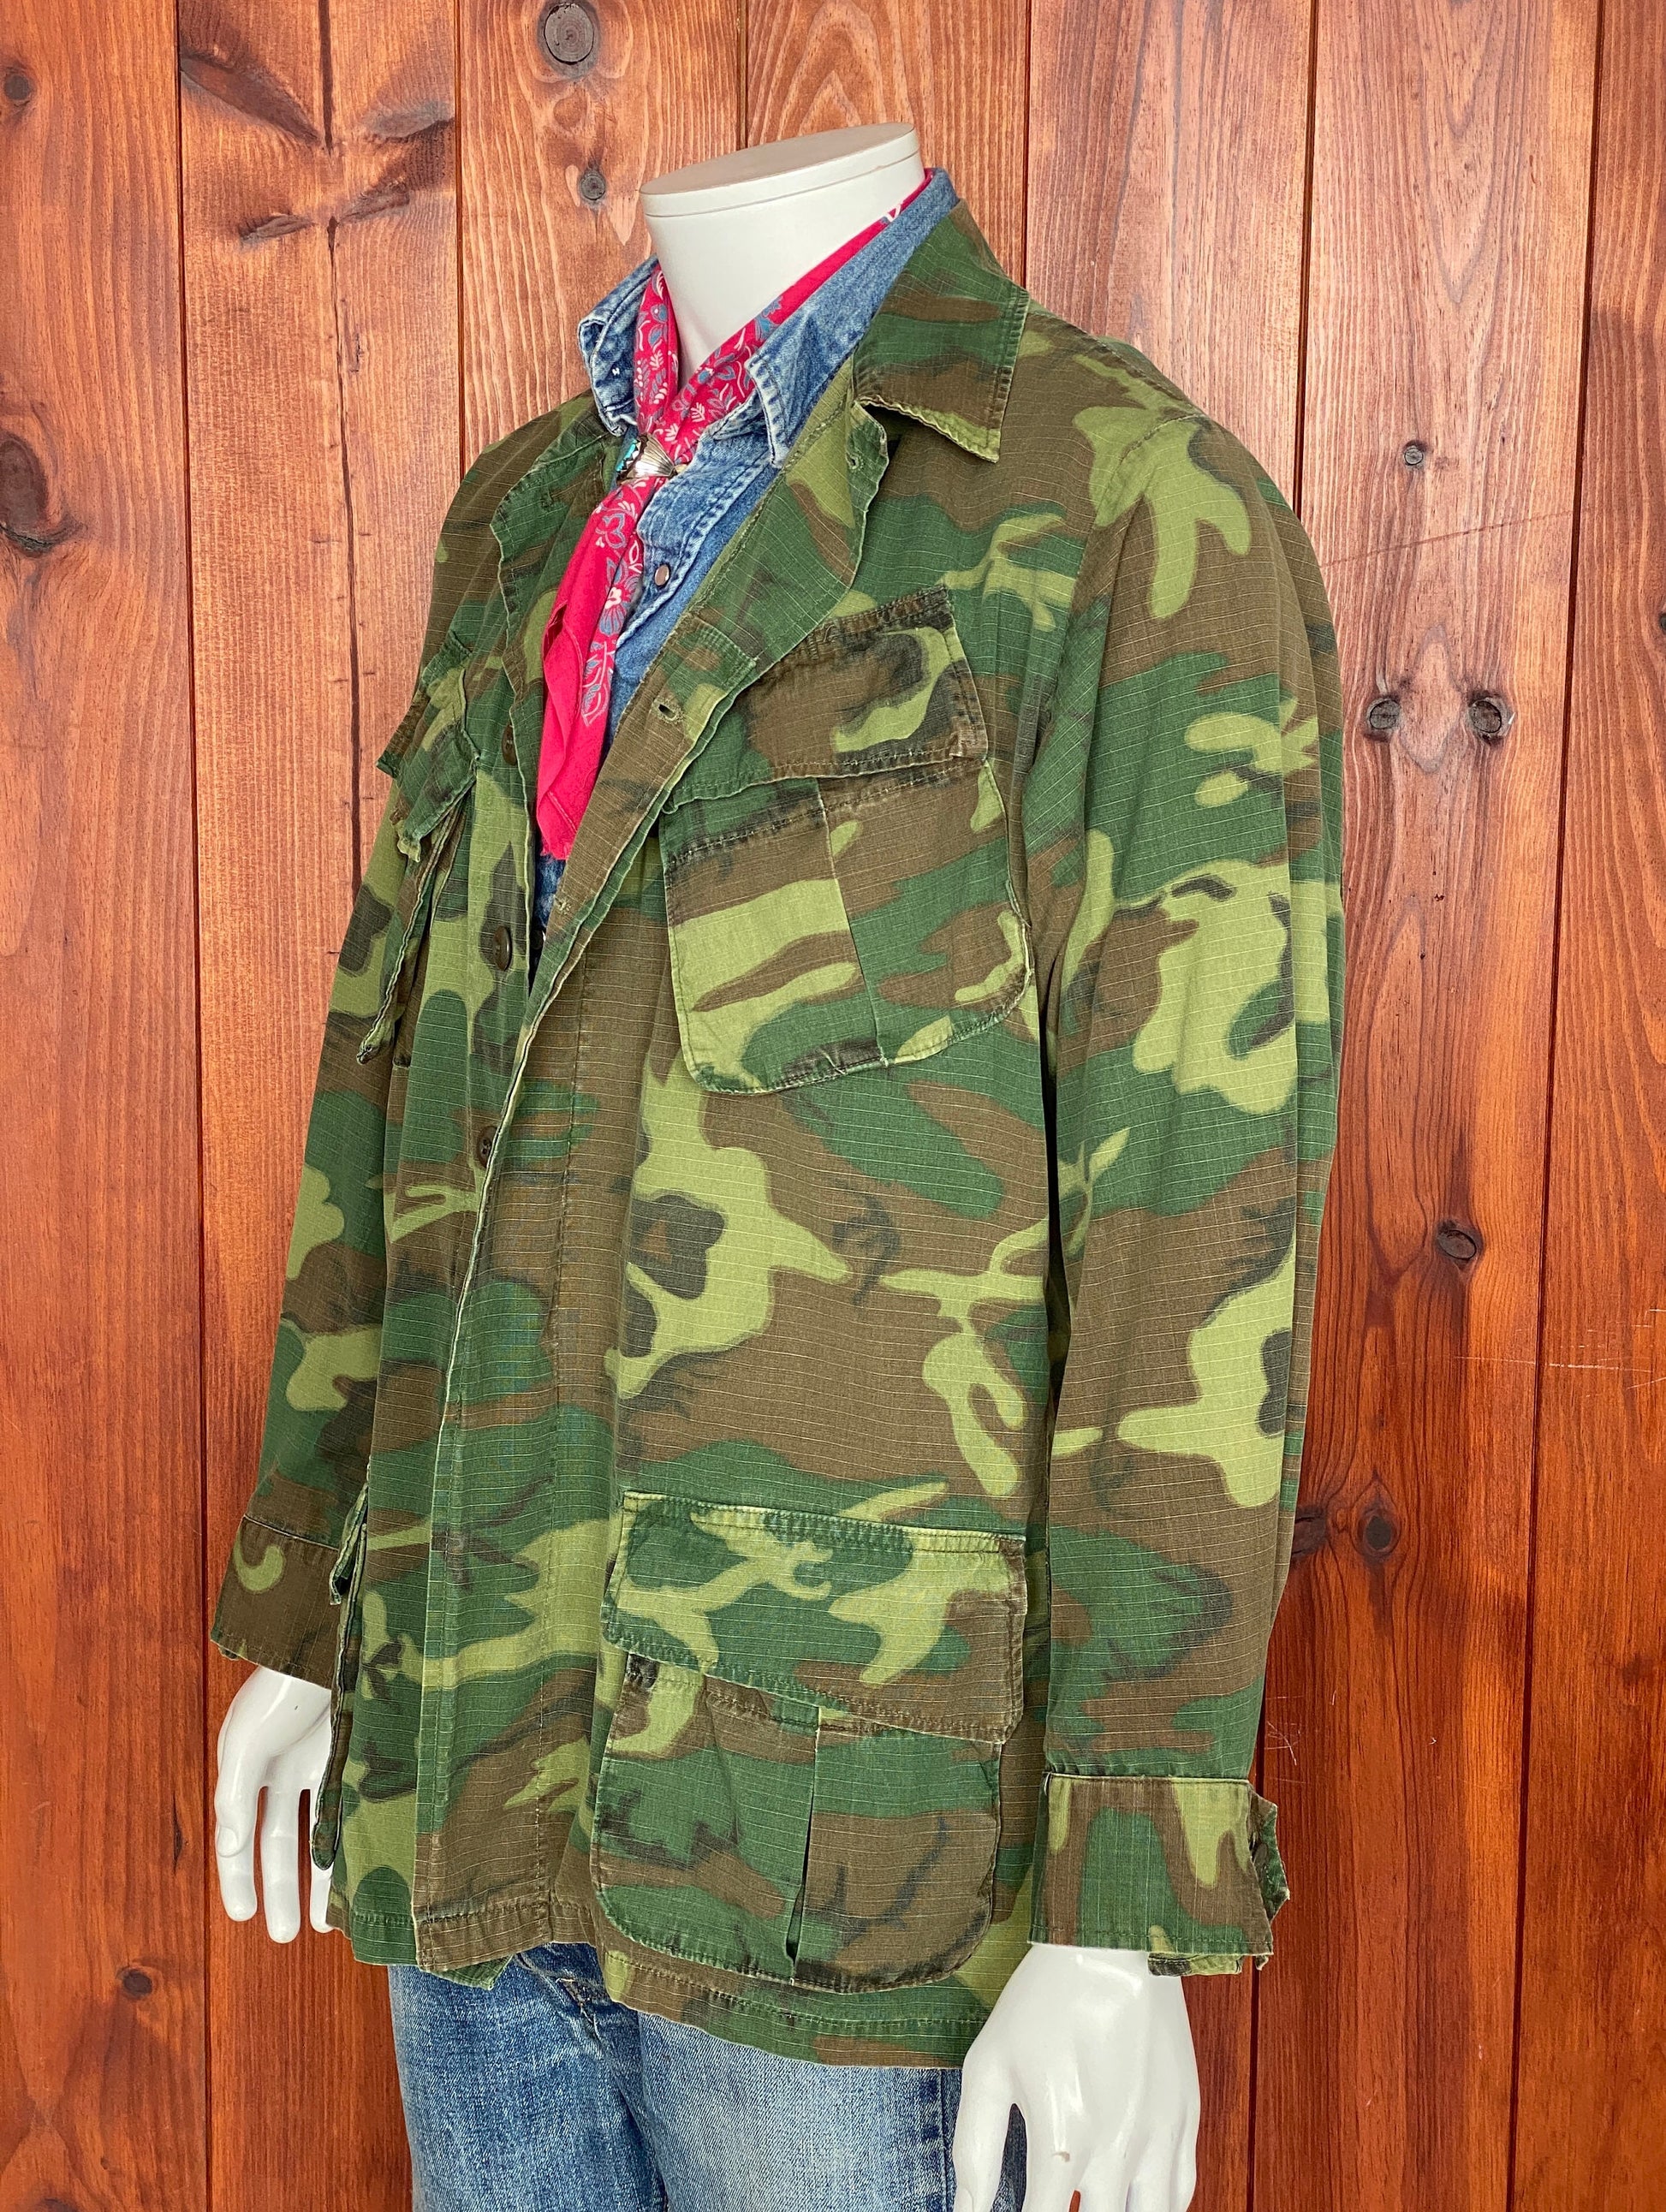 Medium Regular Authentic 1969 US Army Vietnam Era ERDL Camouflage Jungle Jacket | Vintage Military Apparel